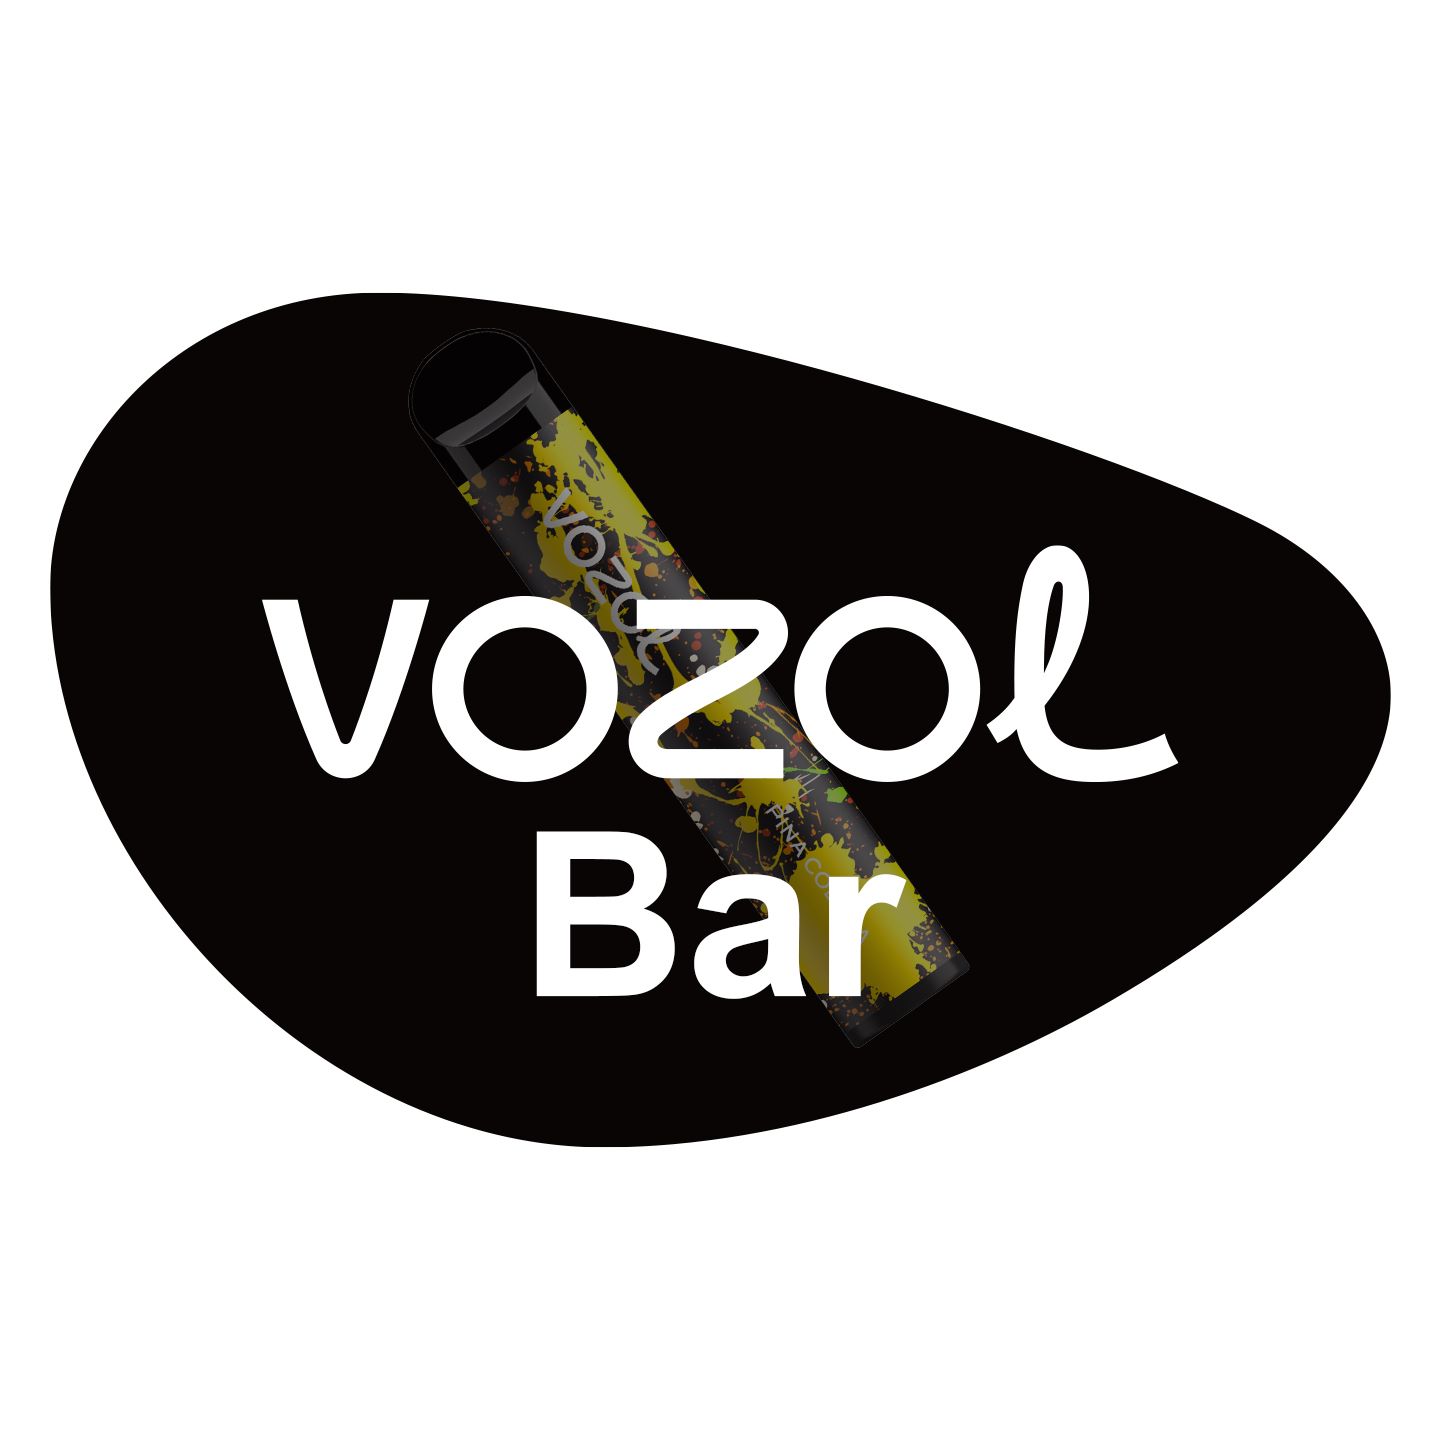 Vozol Bar